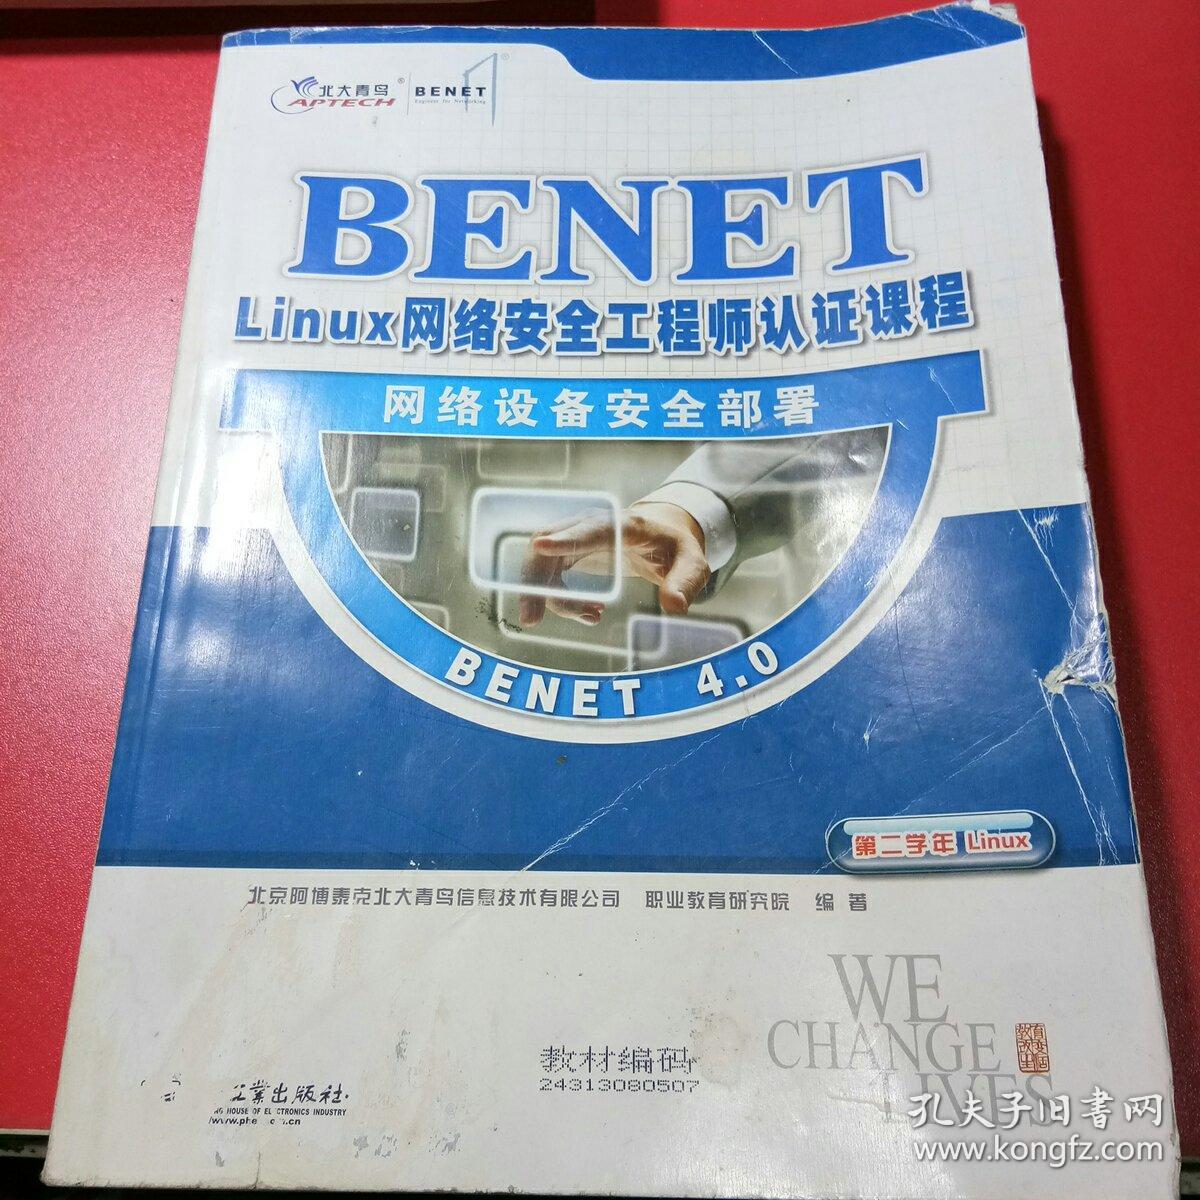 BENET4.0 Linux网络安全工程师认证课程 --网